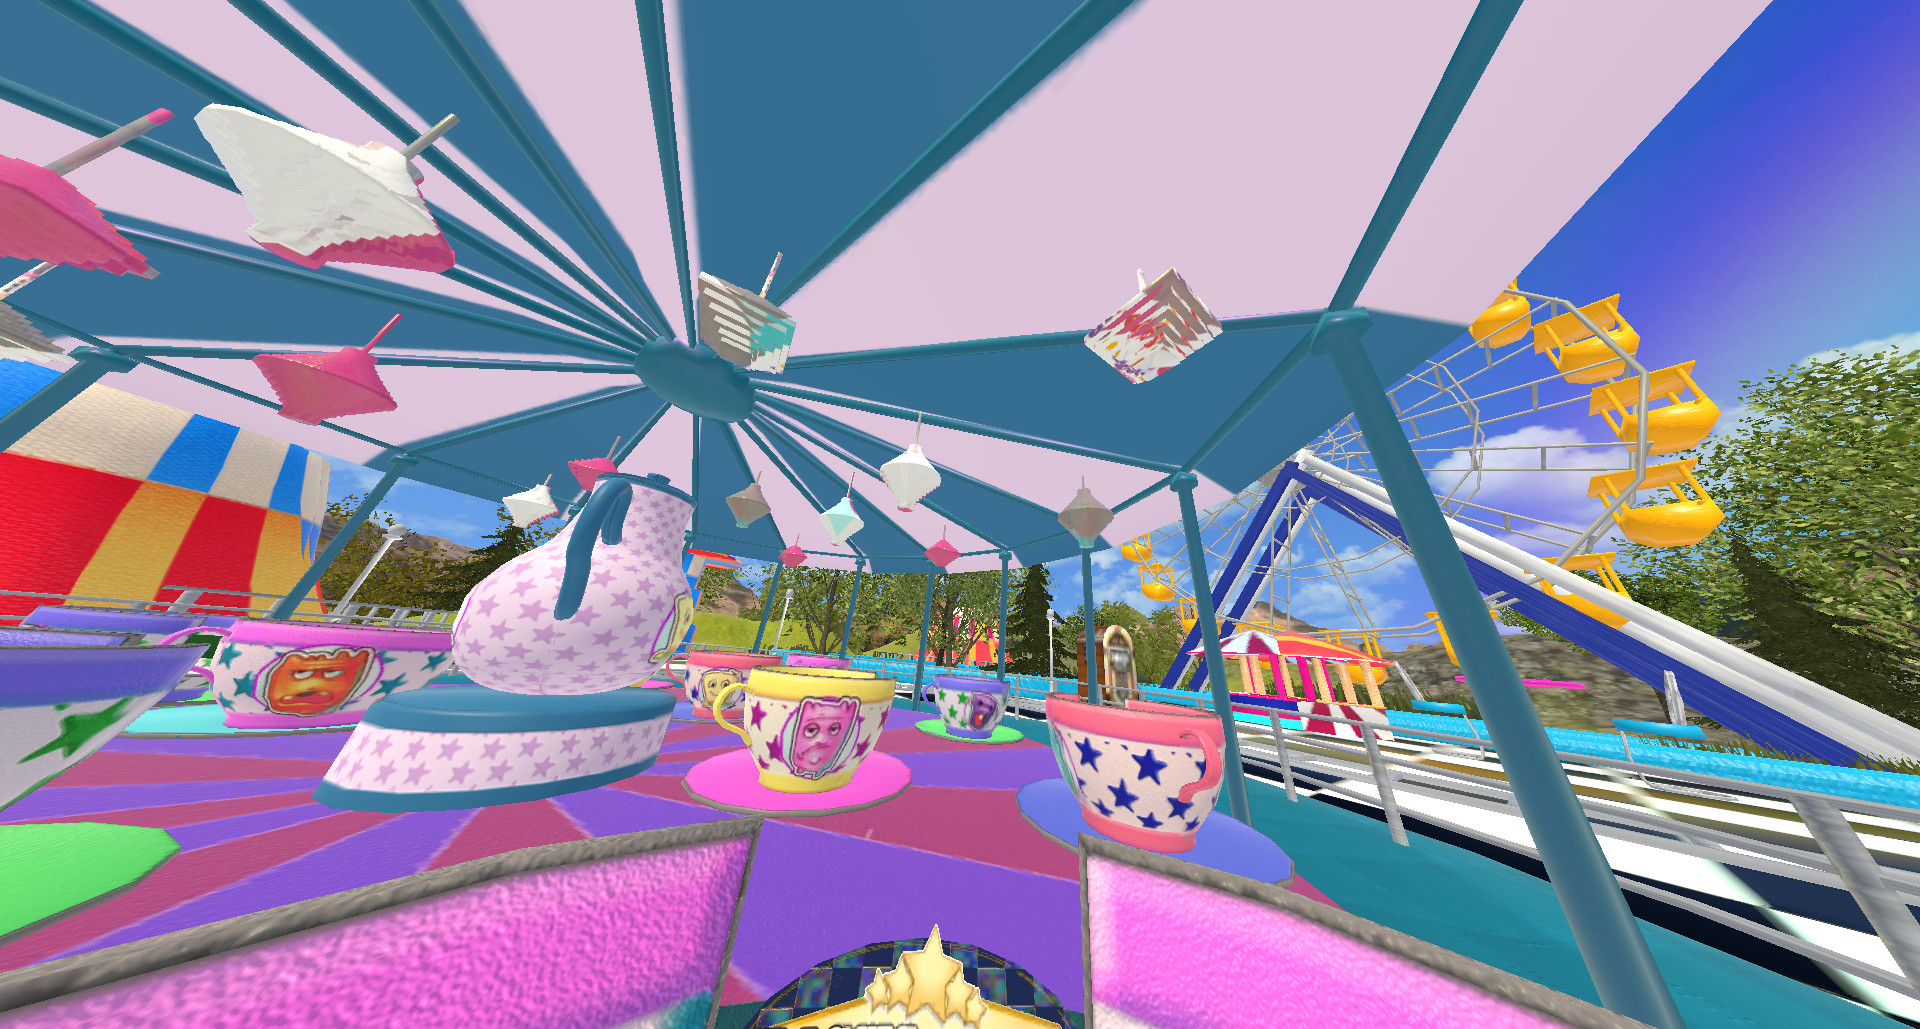 Vr ride. VR Theme Park Rides. Theme Park VR. Игра Theme Park Simulator. VR аттракцион американские горки.